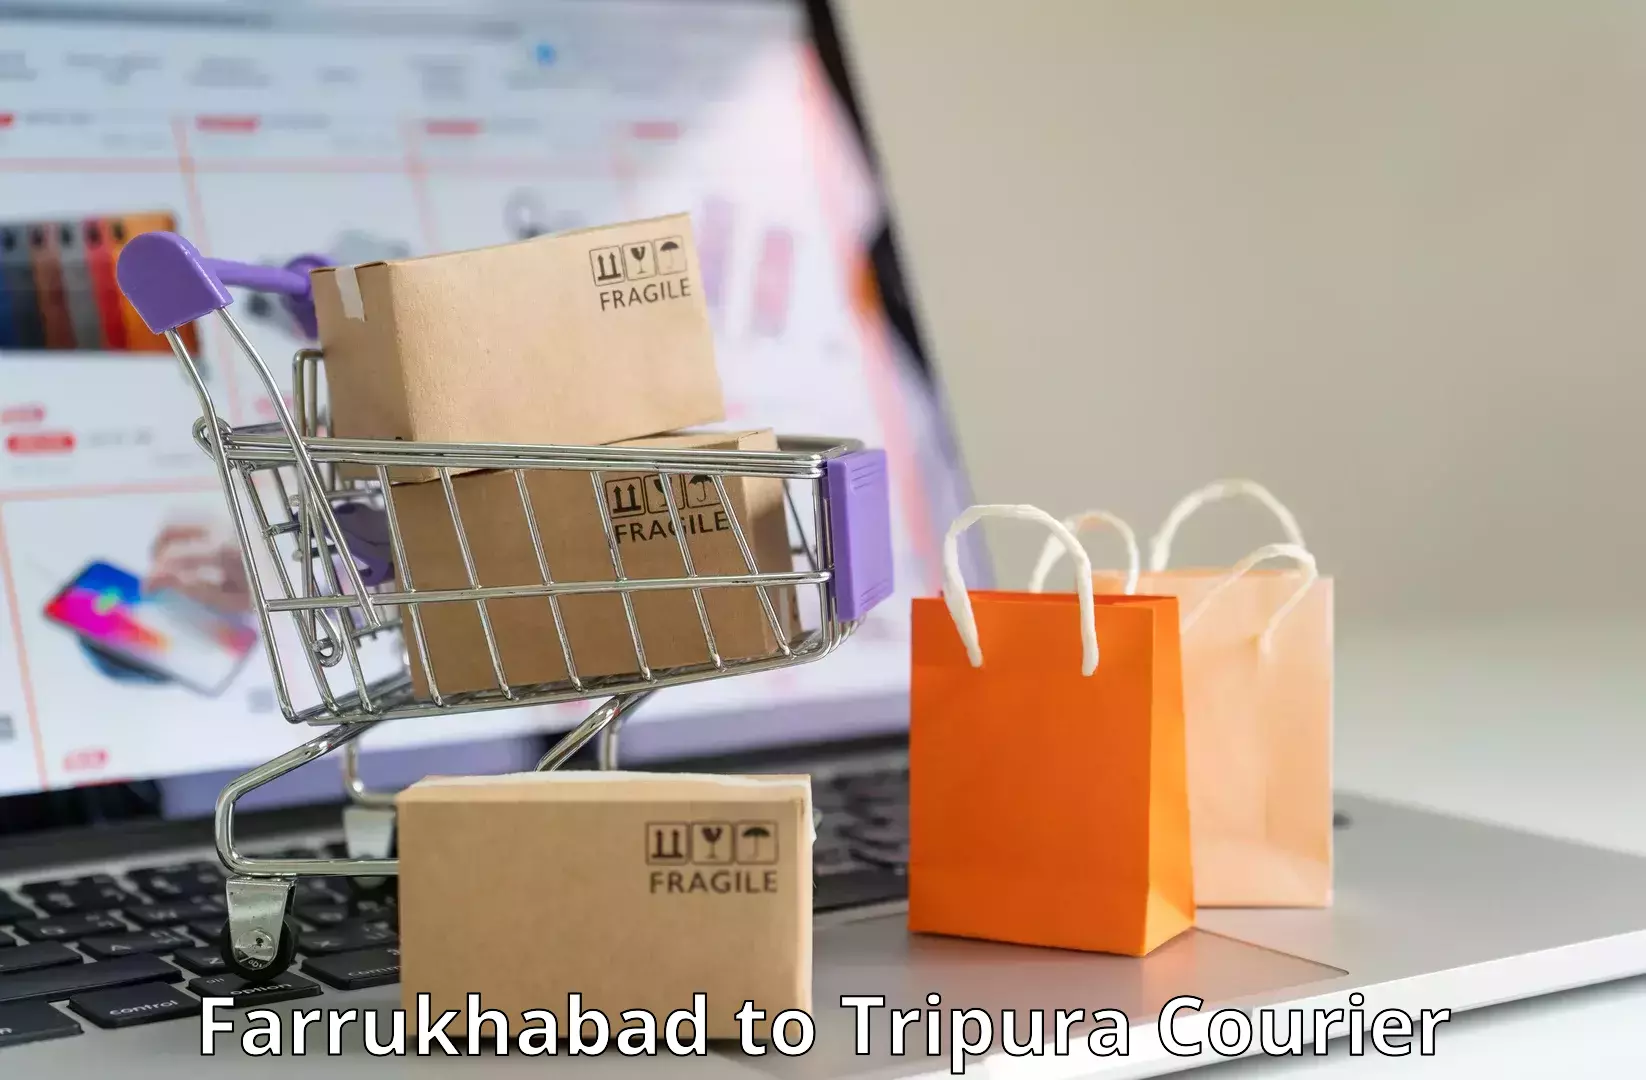 Customer-centric shipping Farrukhabad to Udaipur Tripura